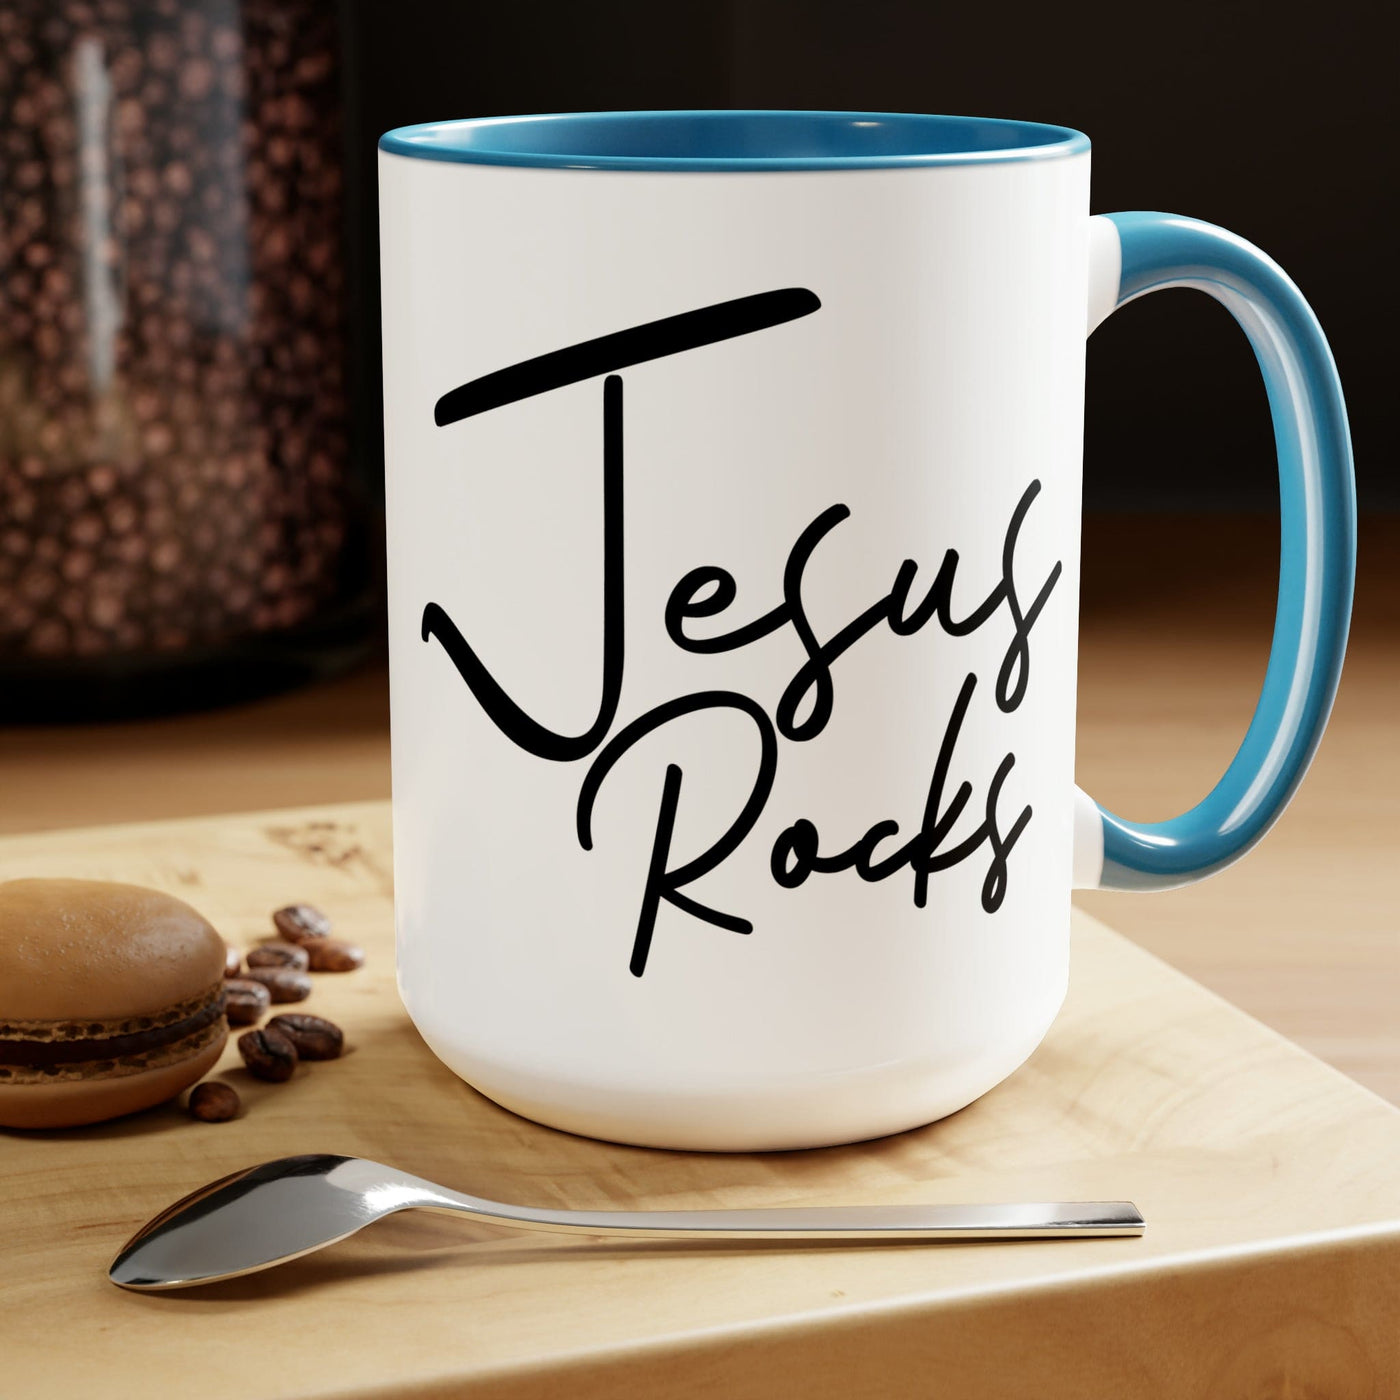 Accent Ceramic Coffee Mug 15oz - Jesus Rocks - Christian Inspiration Affirmation